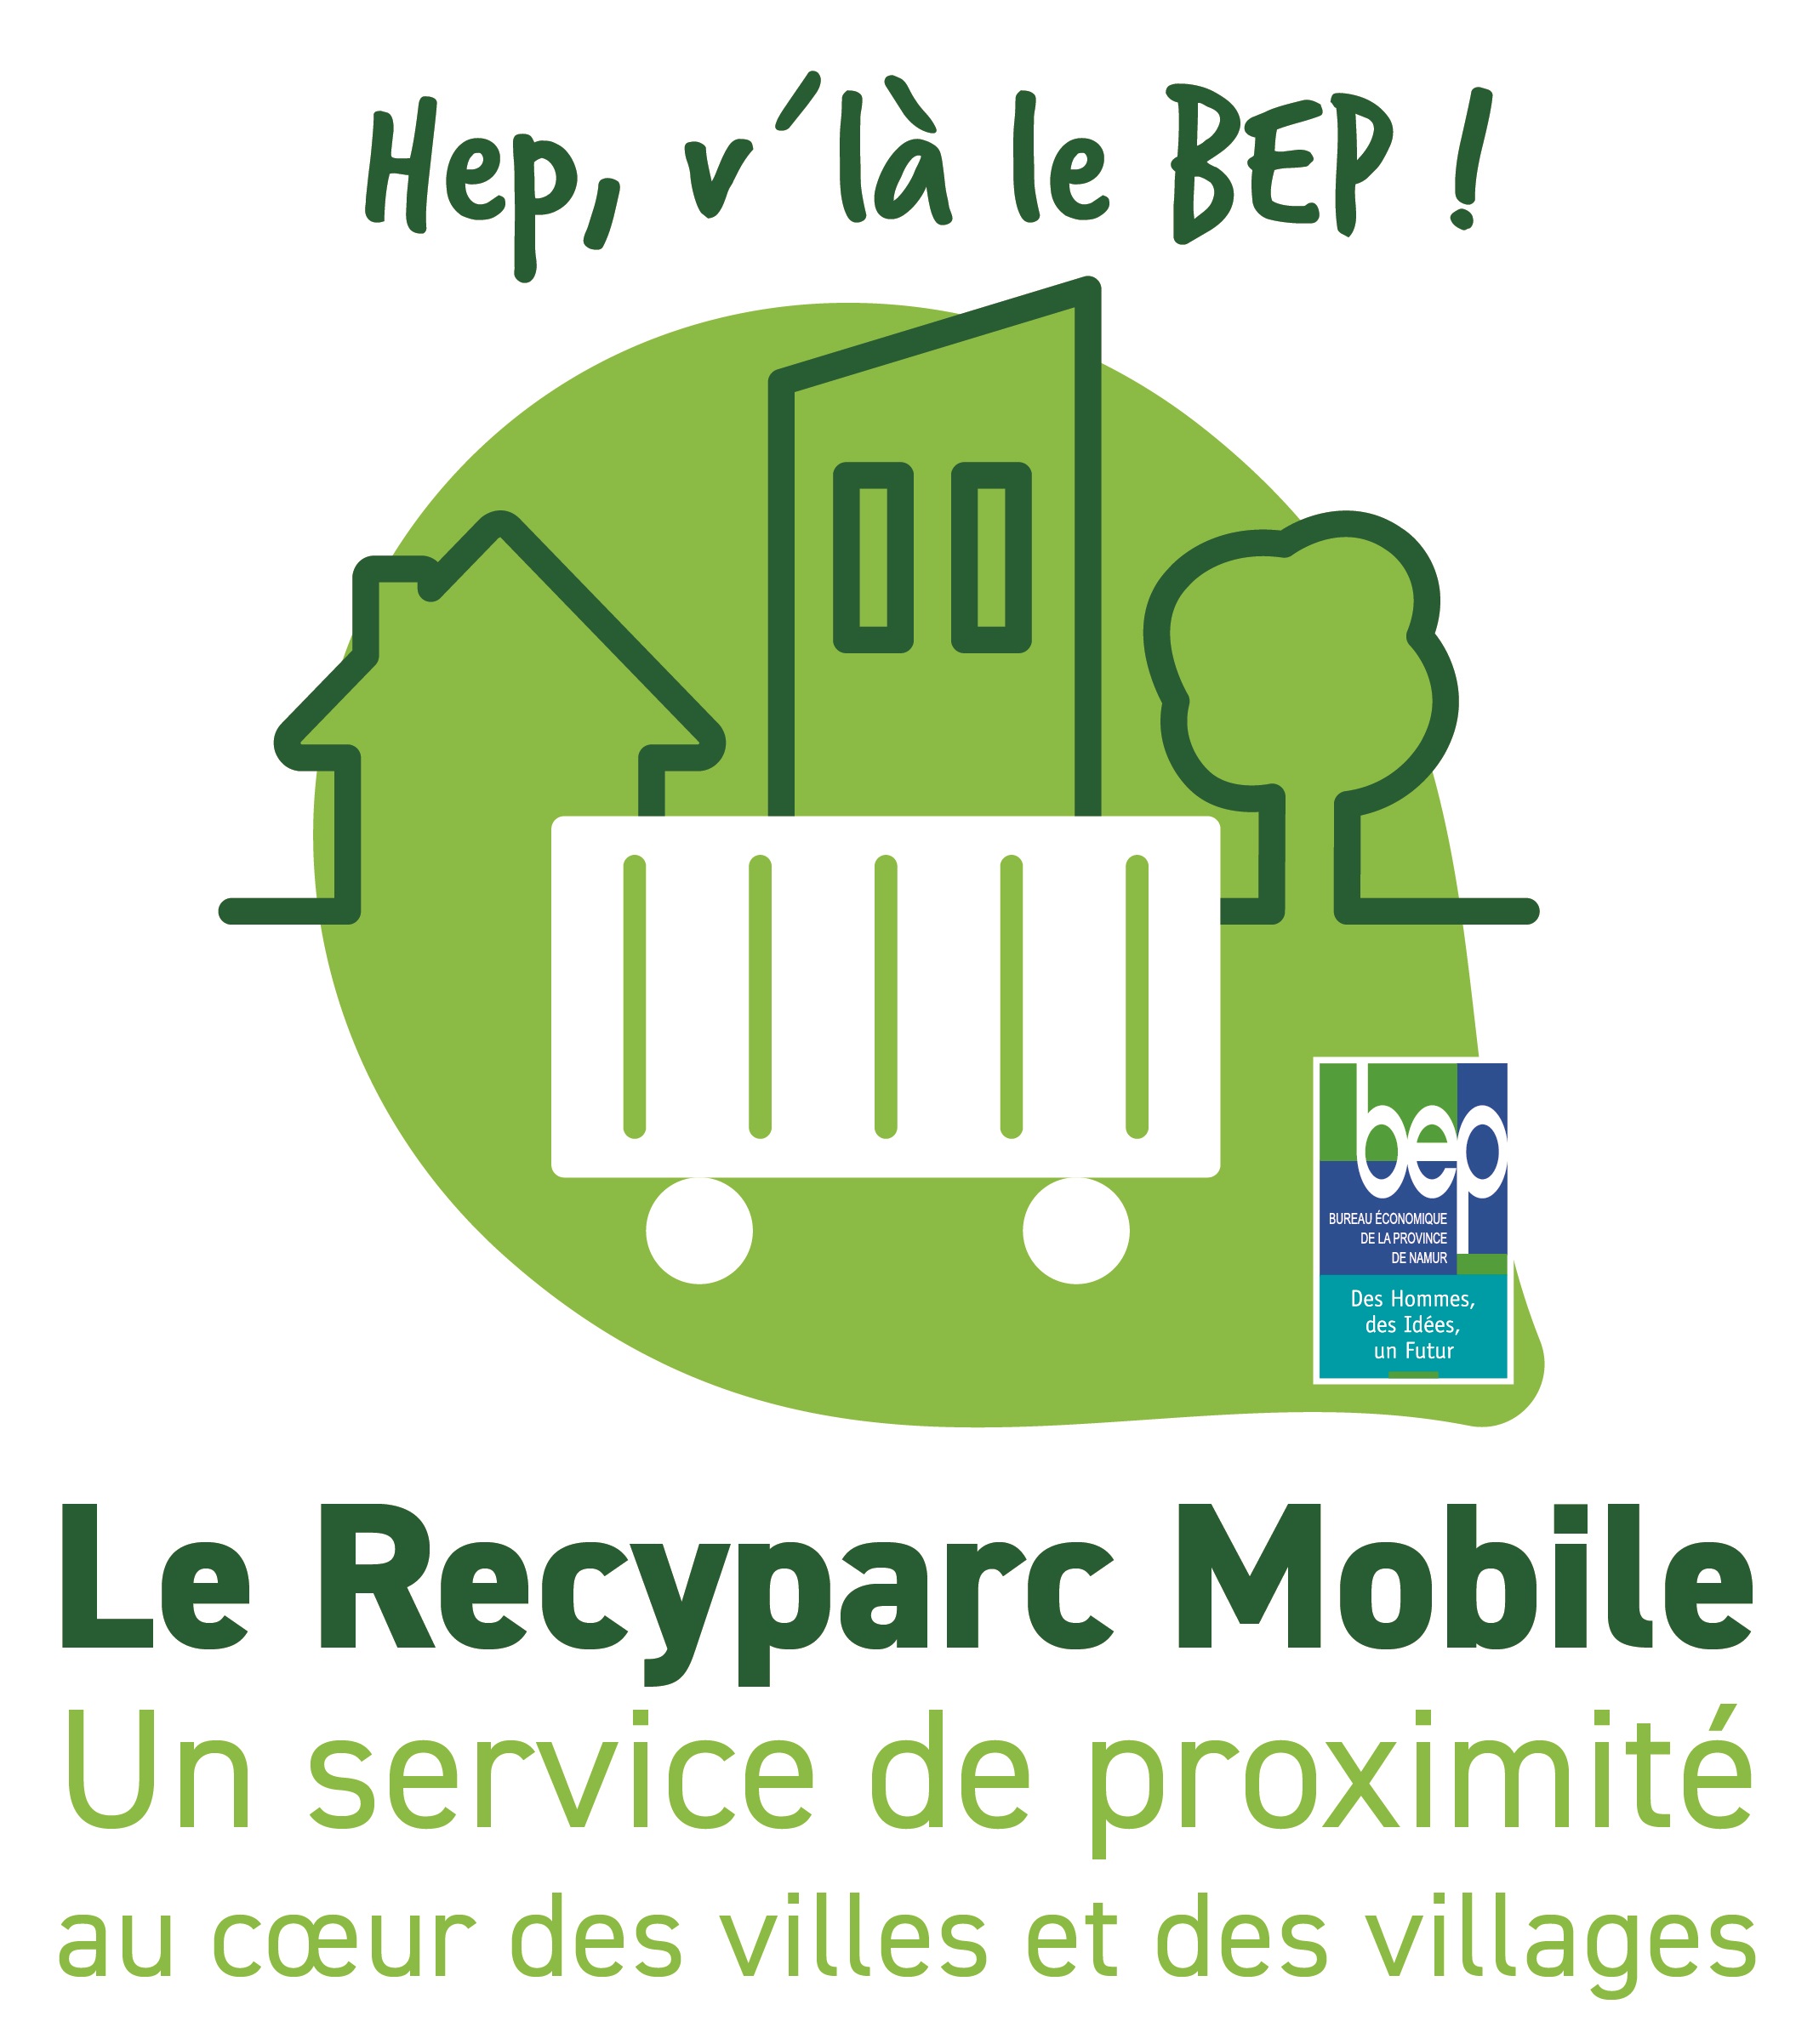 Recyparc mobile